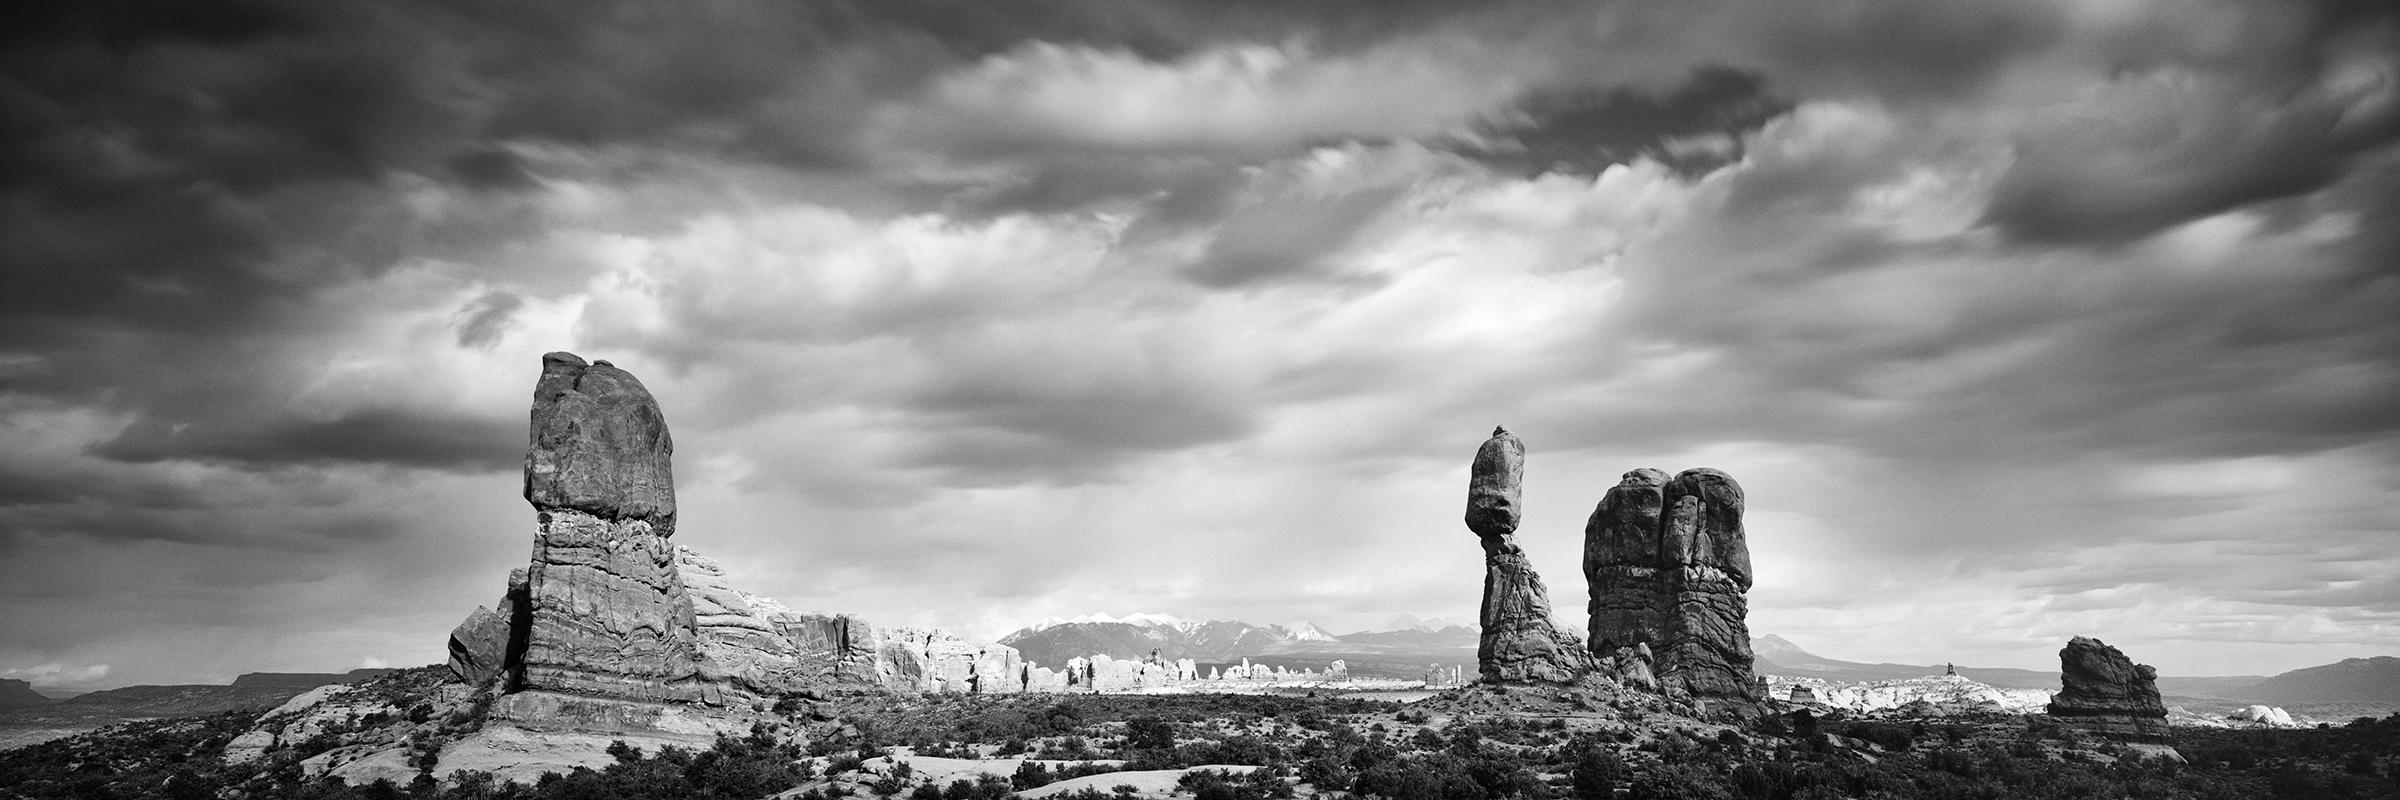 Gerald Berghammer Landscape Photograph - Wild West Panorama, Utah National Park, USA, black white landscape photography